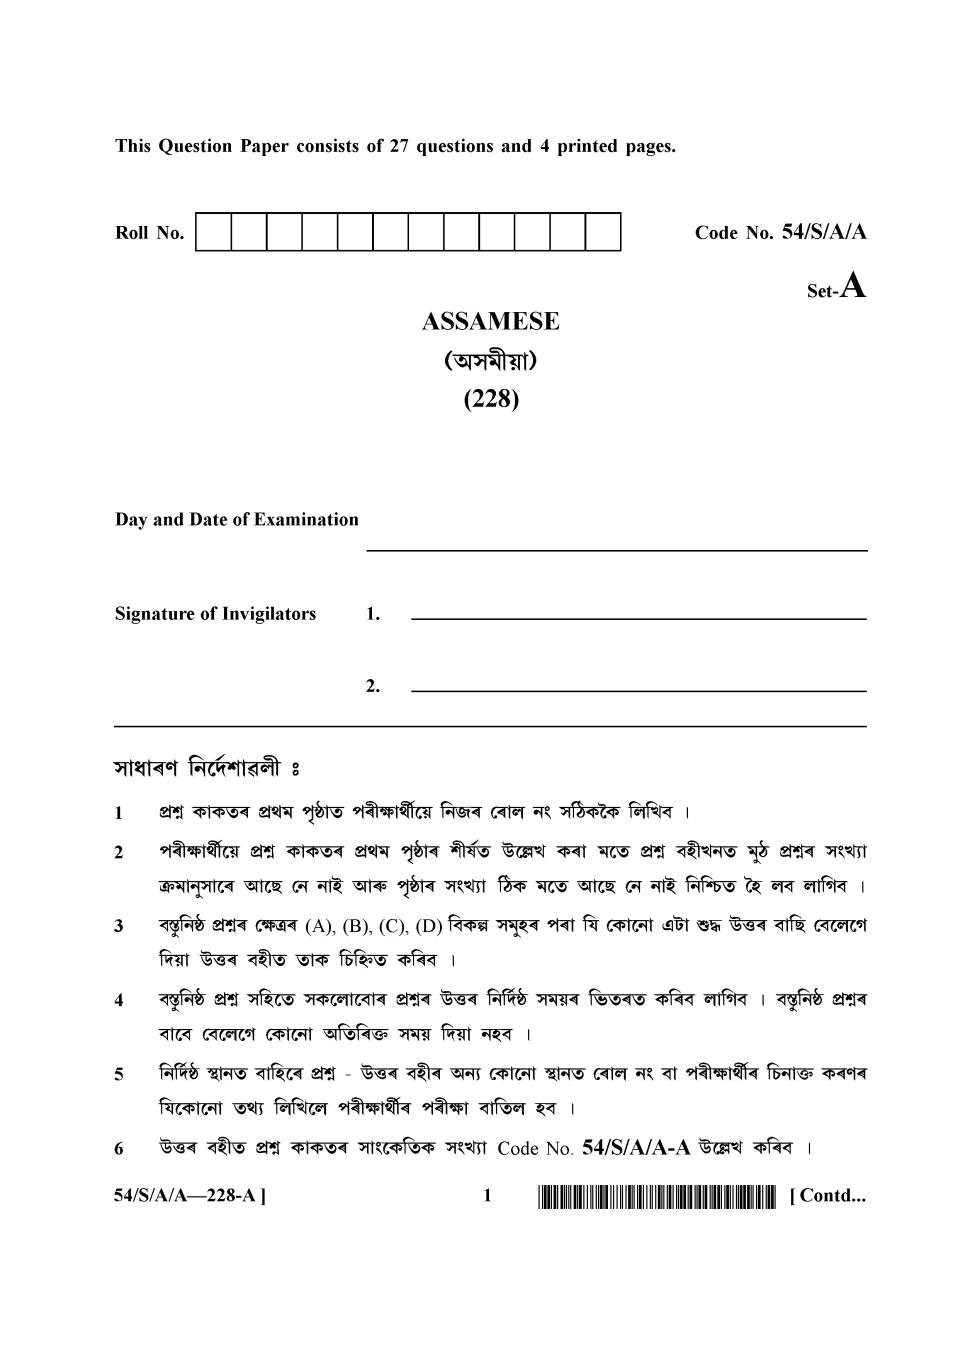 NIOS Class 10 Question Paper Apr 2017 - Assamese - Page 1